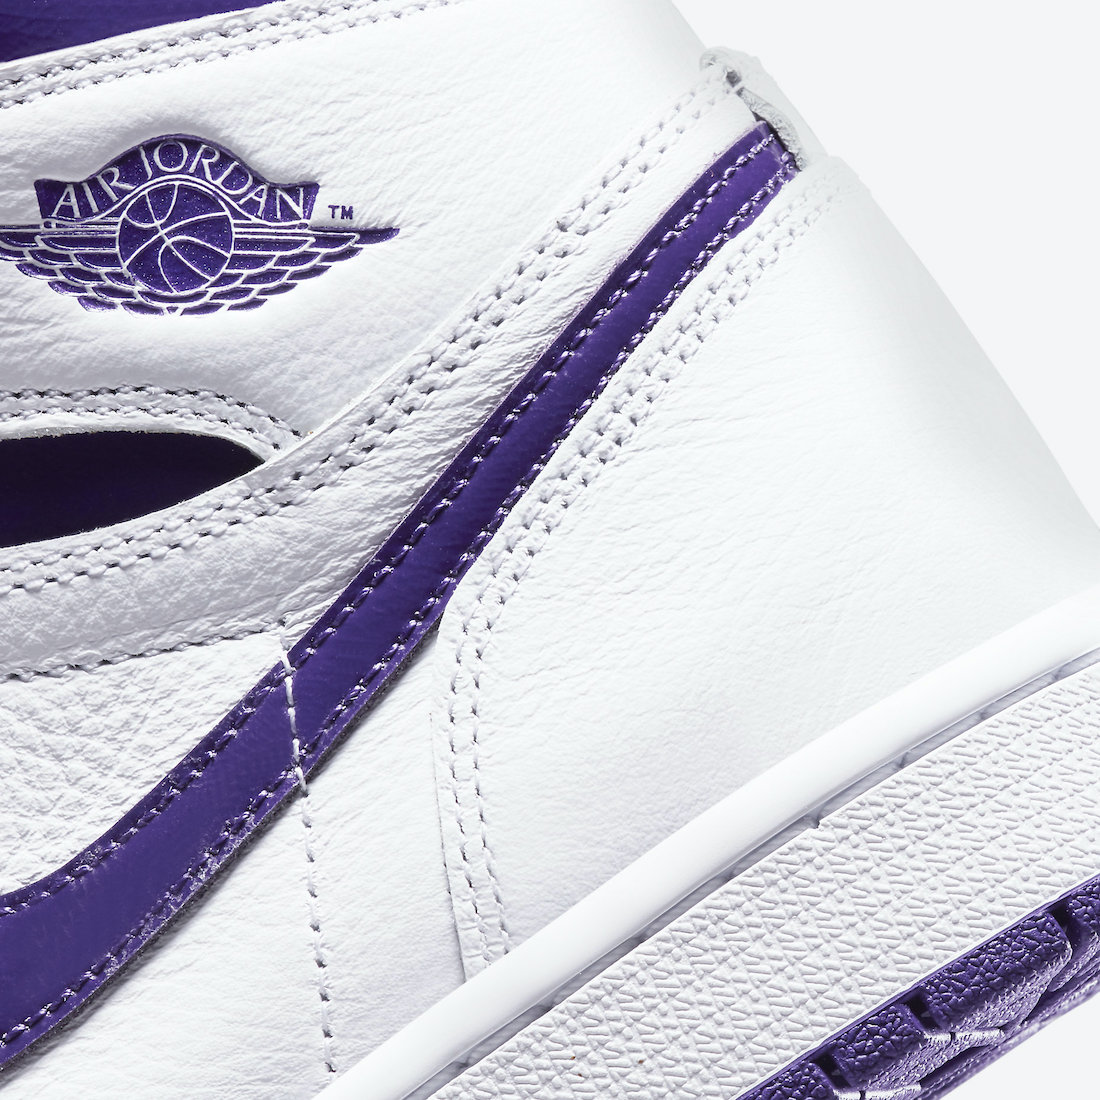 zsneakerheadz, Swoosh, Nike Air, Jordan Brand, Jordan 1s, Jordan, Court Purple, Air Jordan 1 High OG WMNS“ Court Purple”, Air Jordan 1, Air Jordan